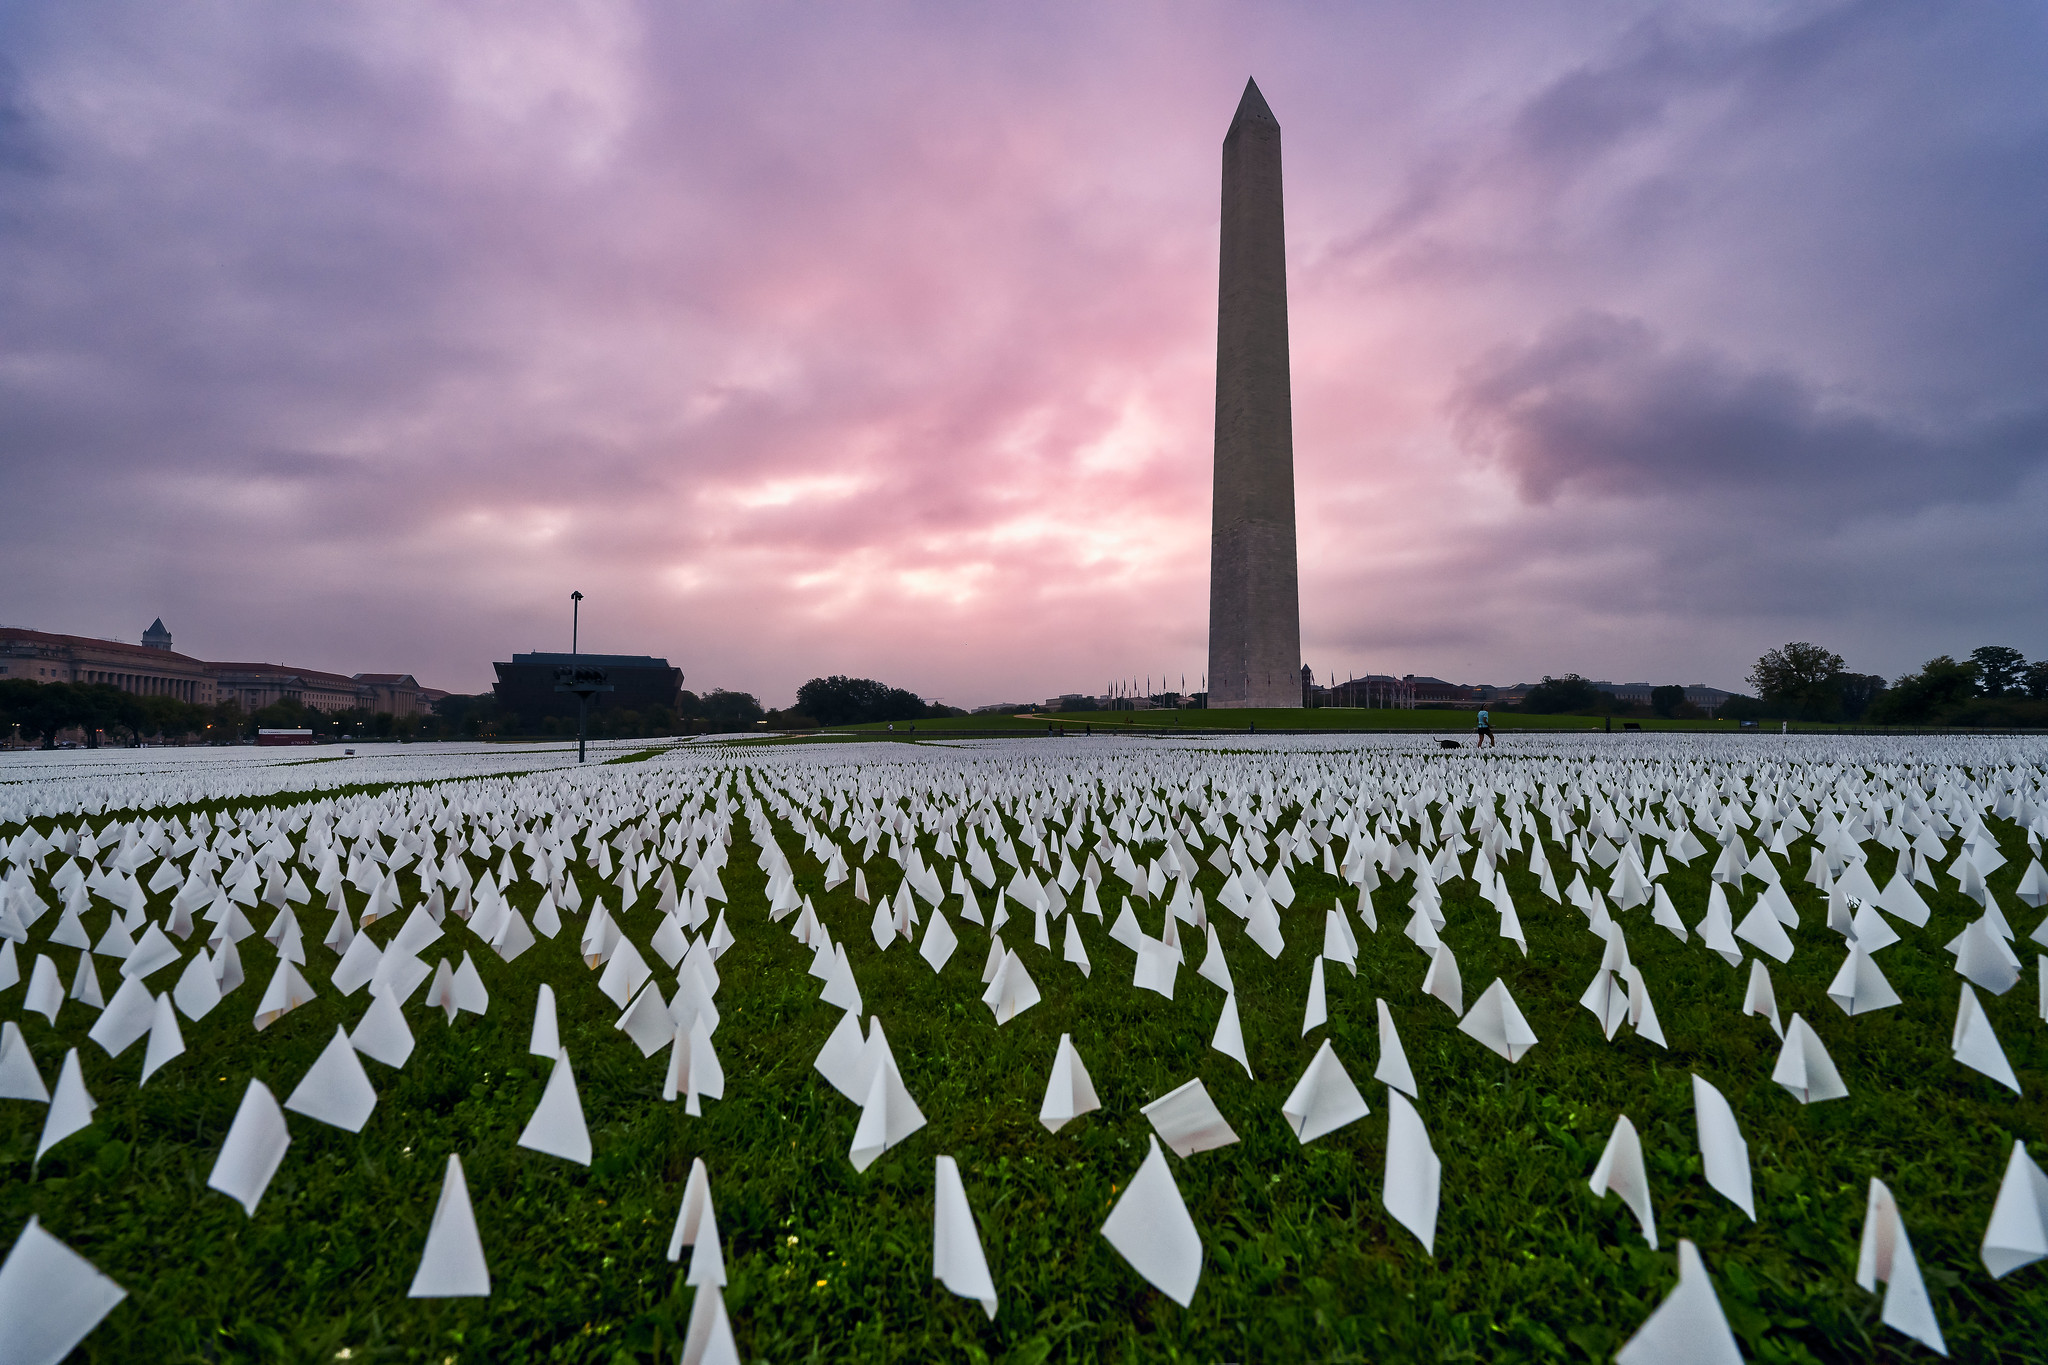 Photograph of white flags on lawn surrounding Washington Monument.